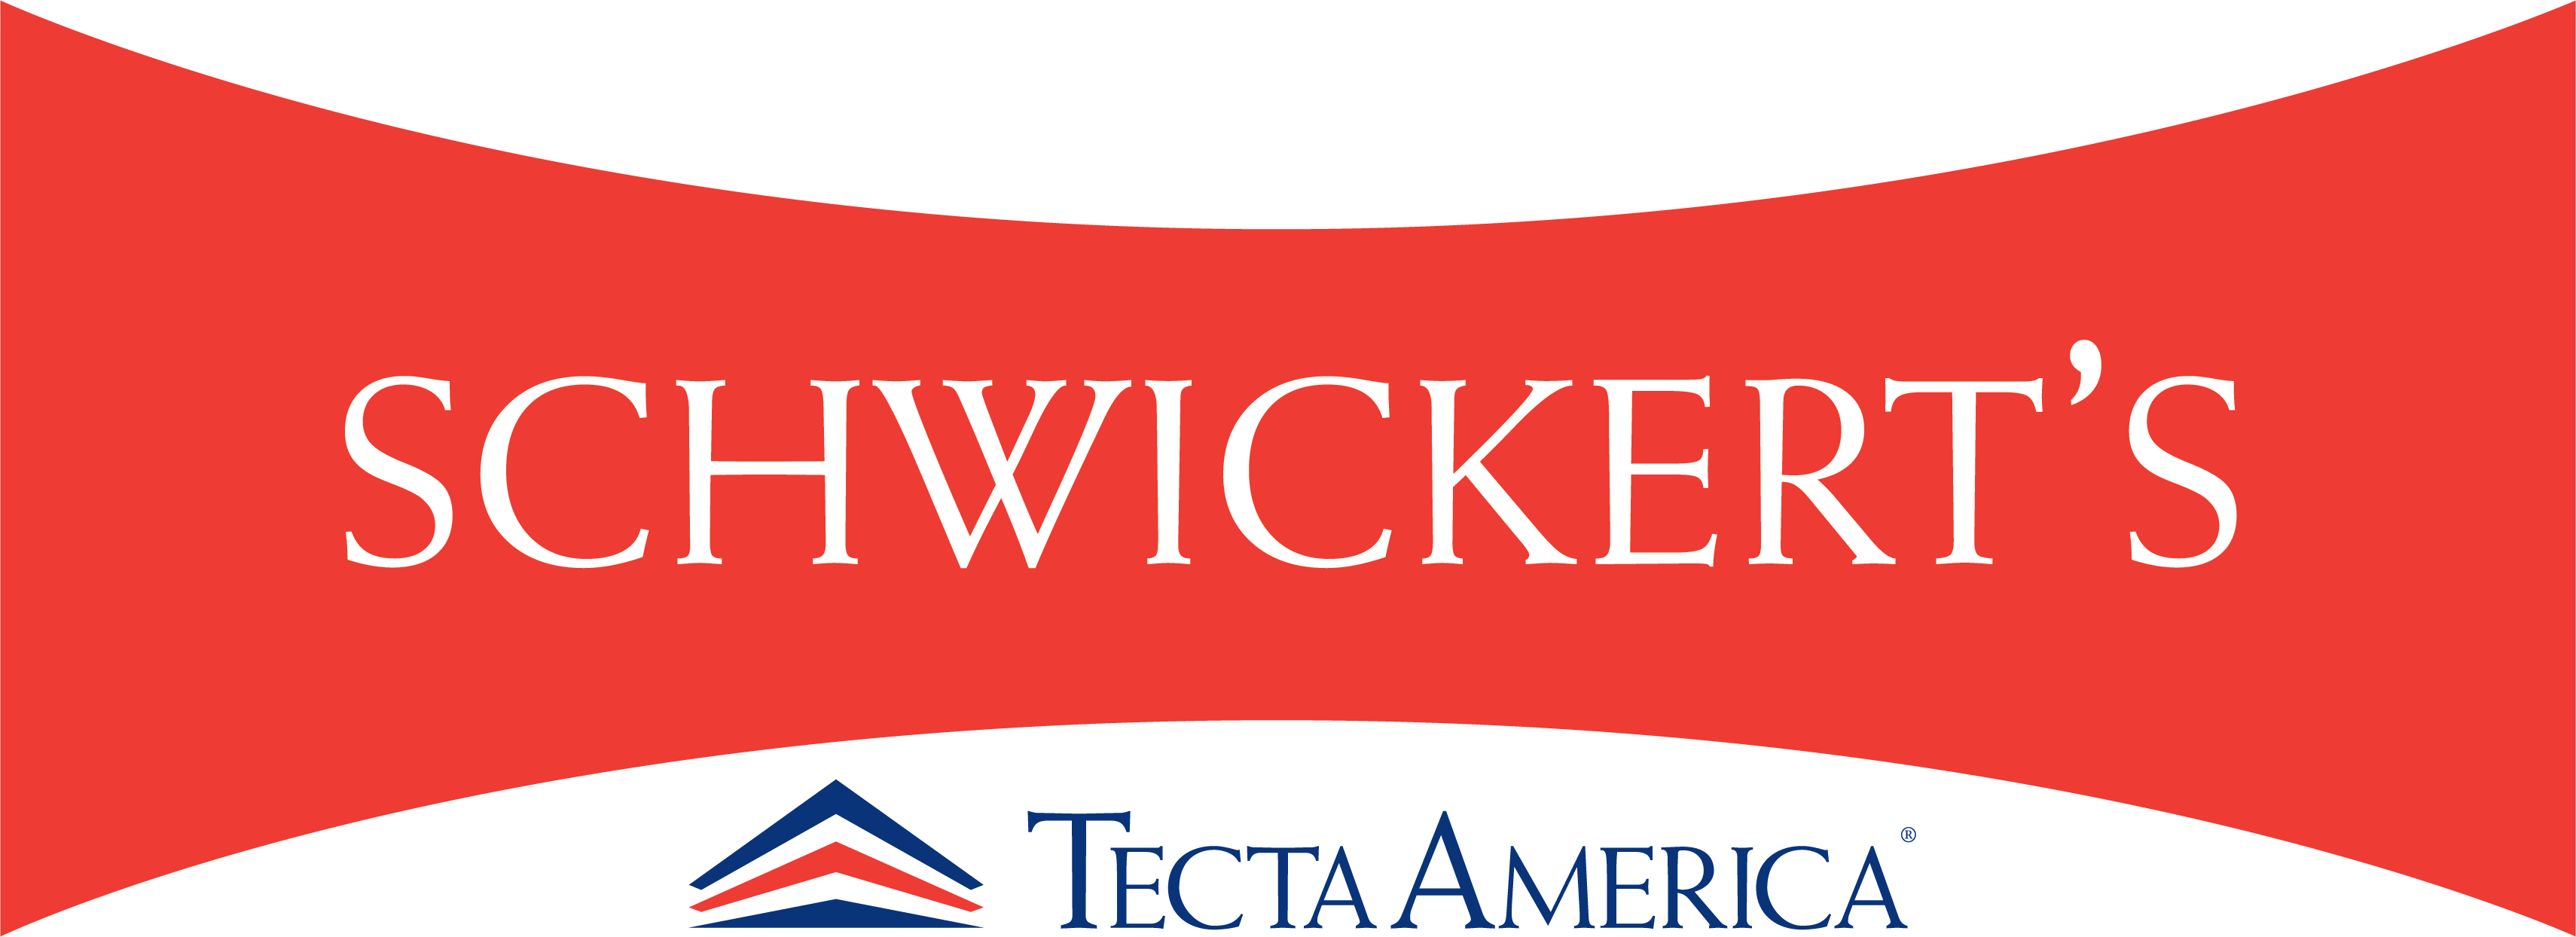 Schwickert's Tecta America Logo